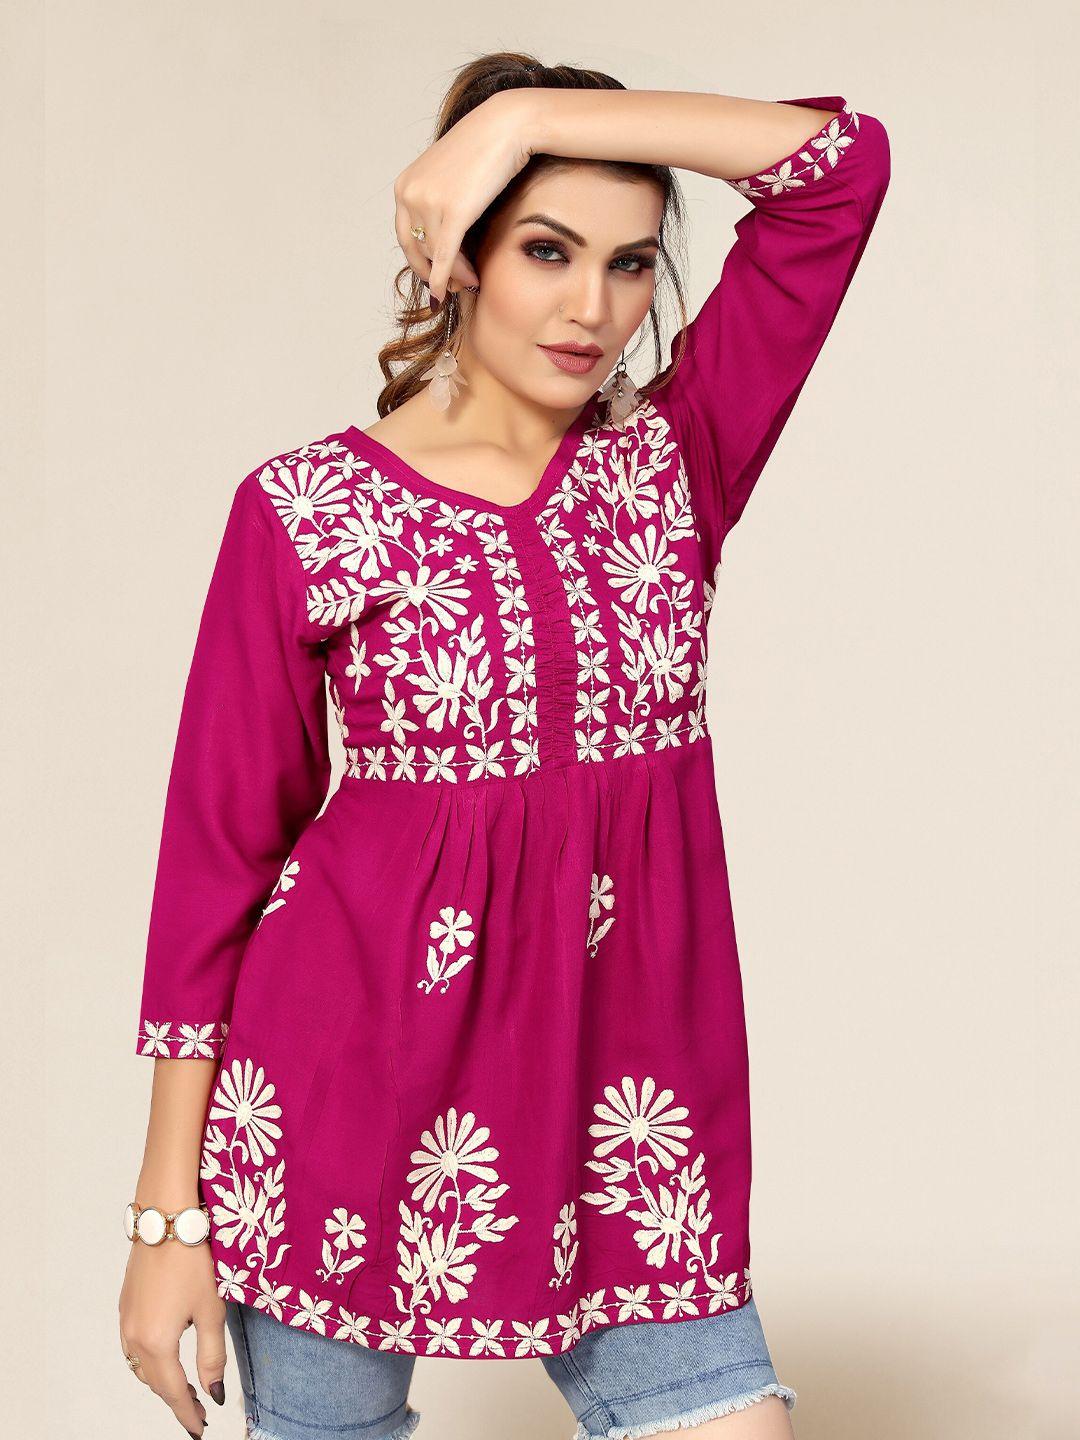 winza-designer-pink-floral-embroidered-top